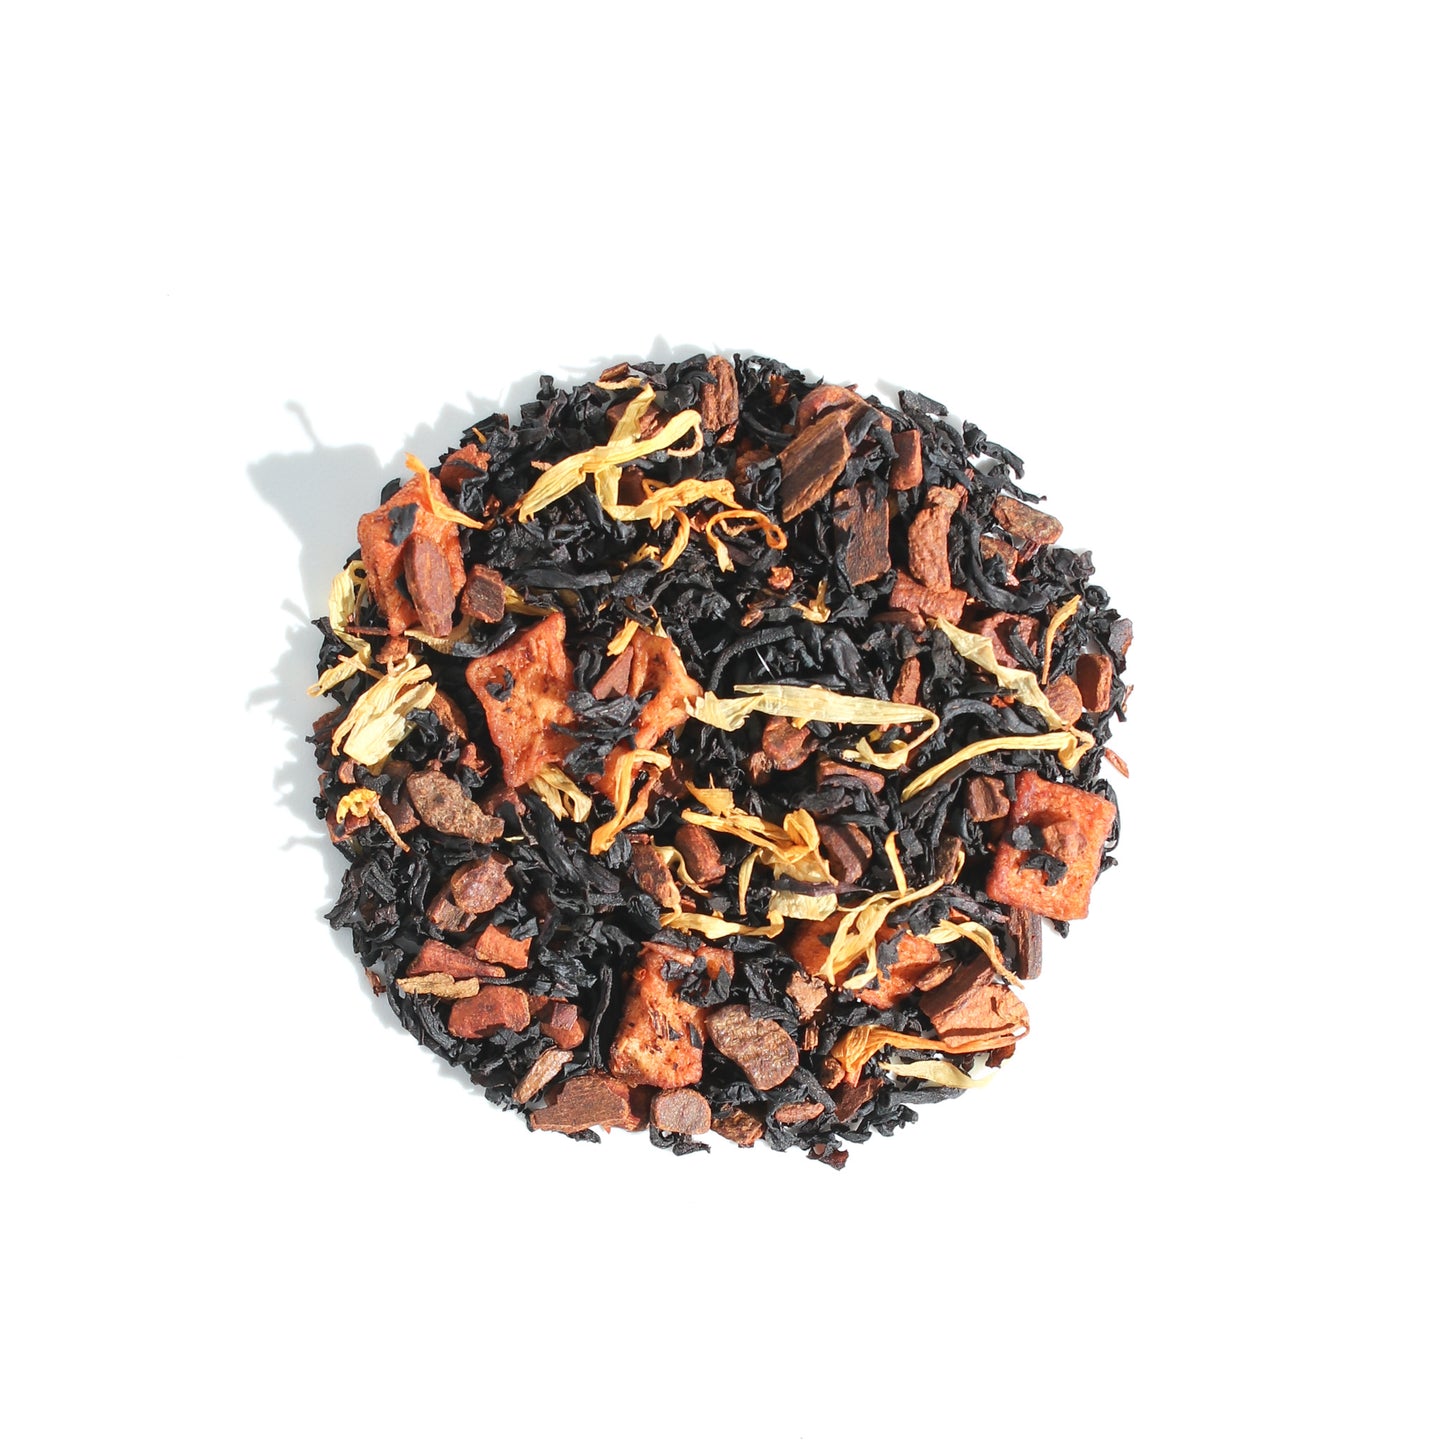 Cinny Roll Black Tea (Caramel / Apple / Cinnamon)